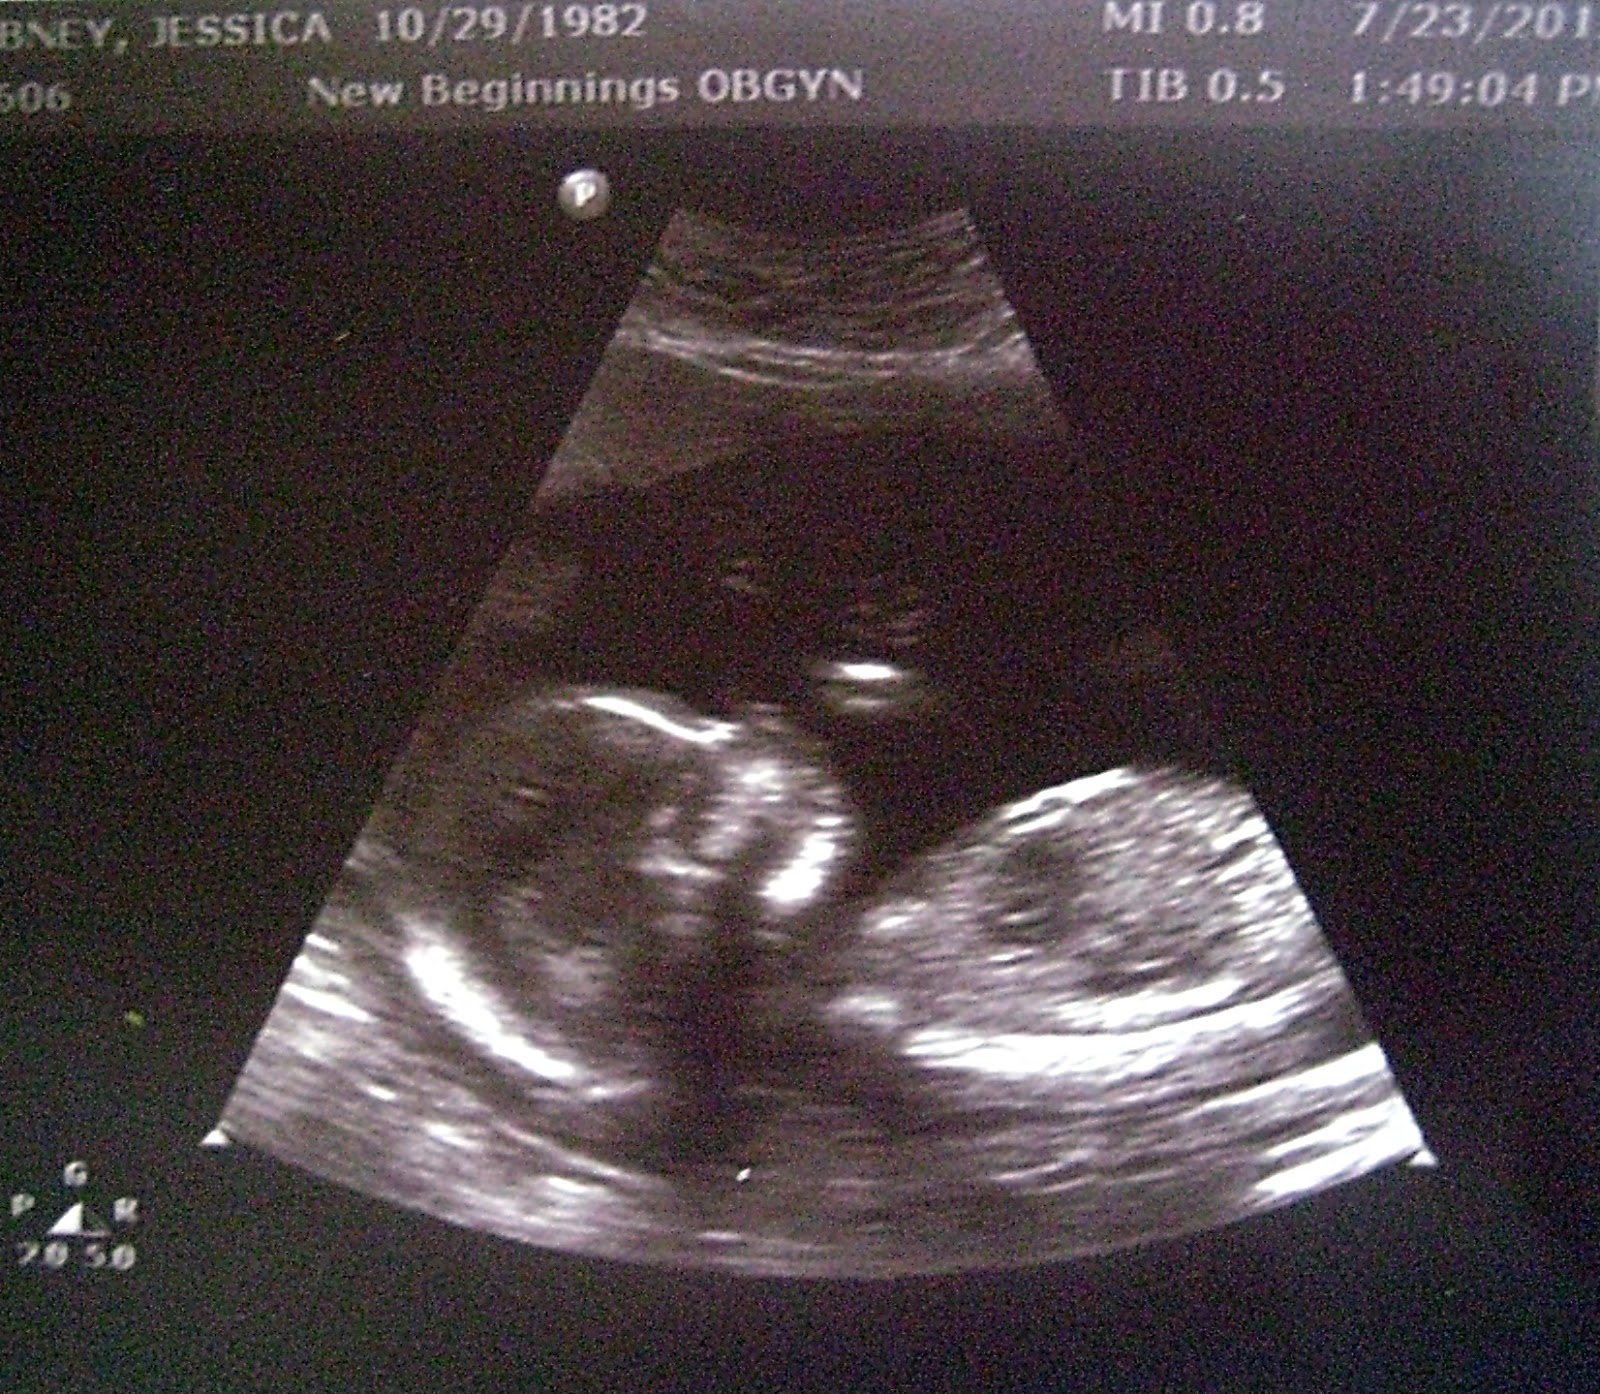 16 Weeks Pregnant Ultrasound Girl